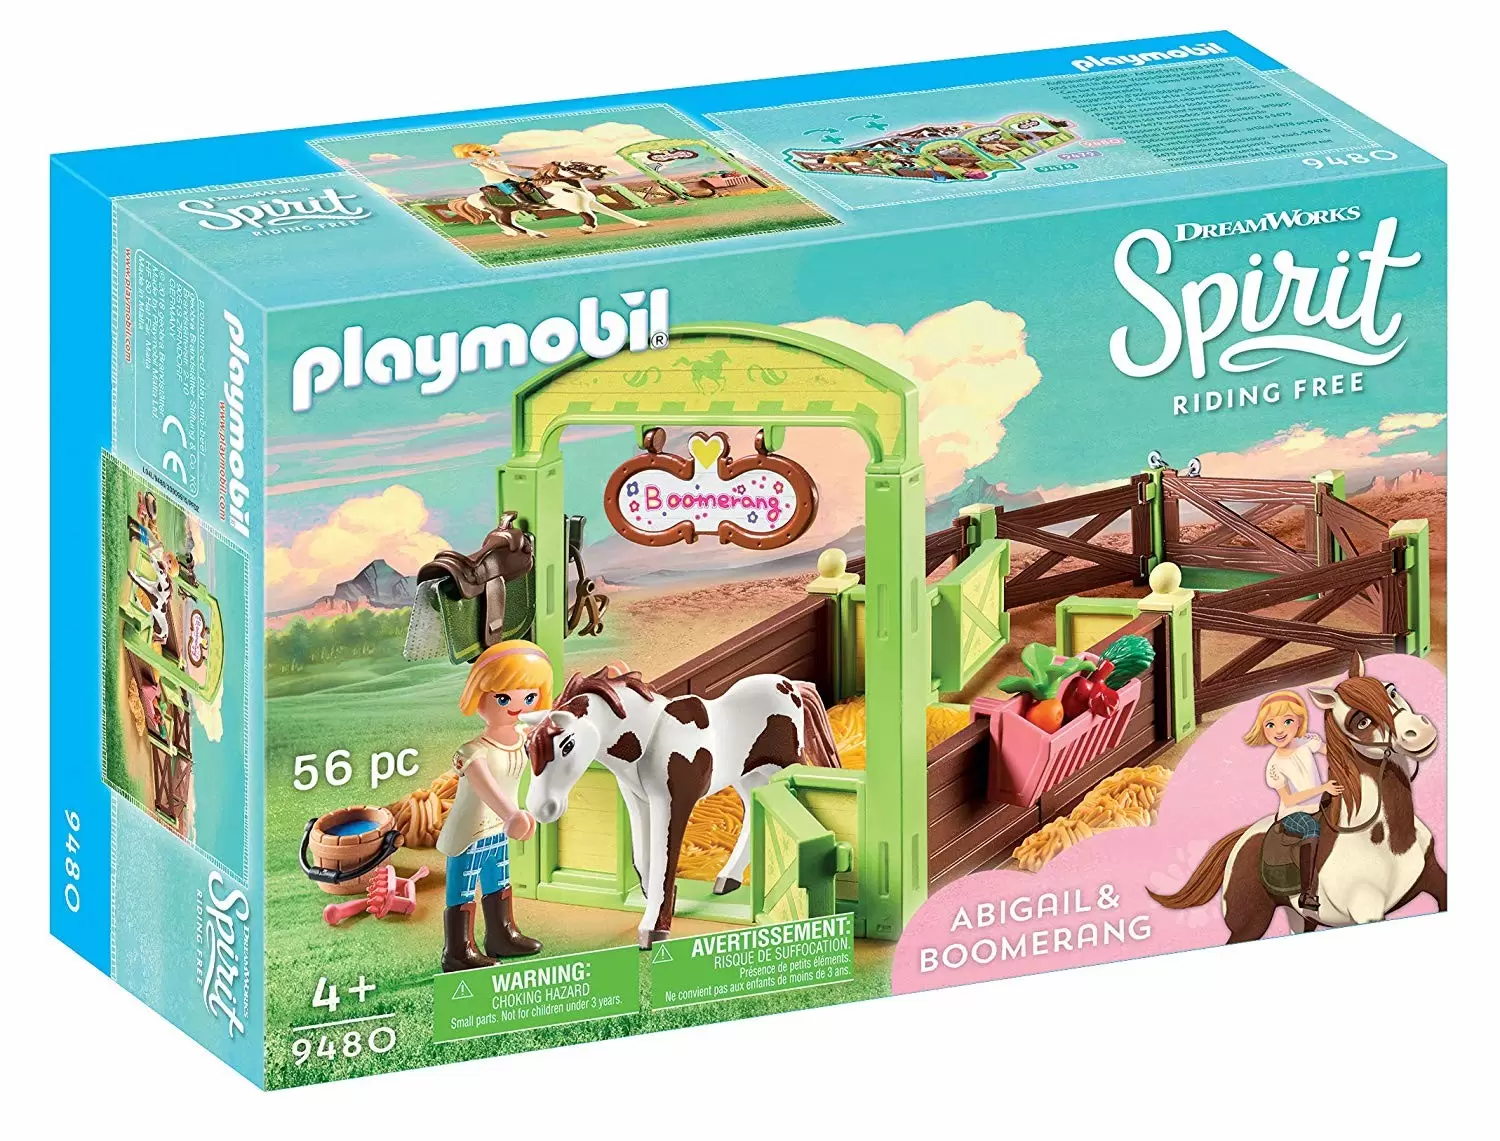 Playmobil Spirit Dreamworks - Box Abigail & Boomerang